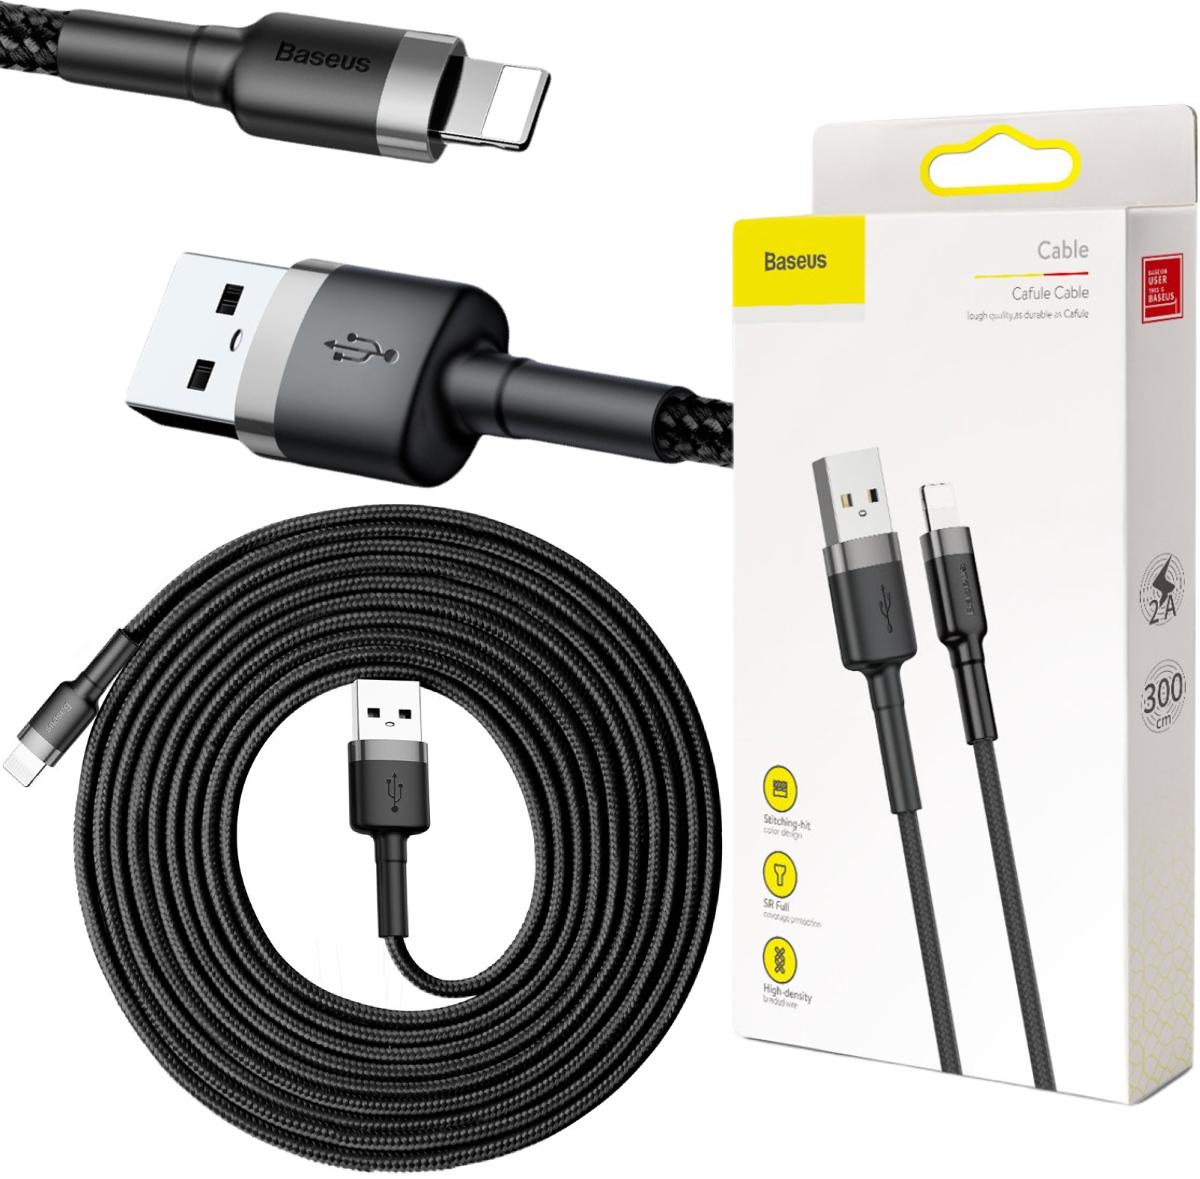 Baseus Cafule Cable nylonowy kabel USB / Lightning QC 3.0 2 A 3 m CALKLF-RG1 – najważniejsze cechy: